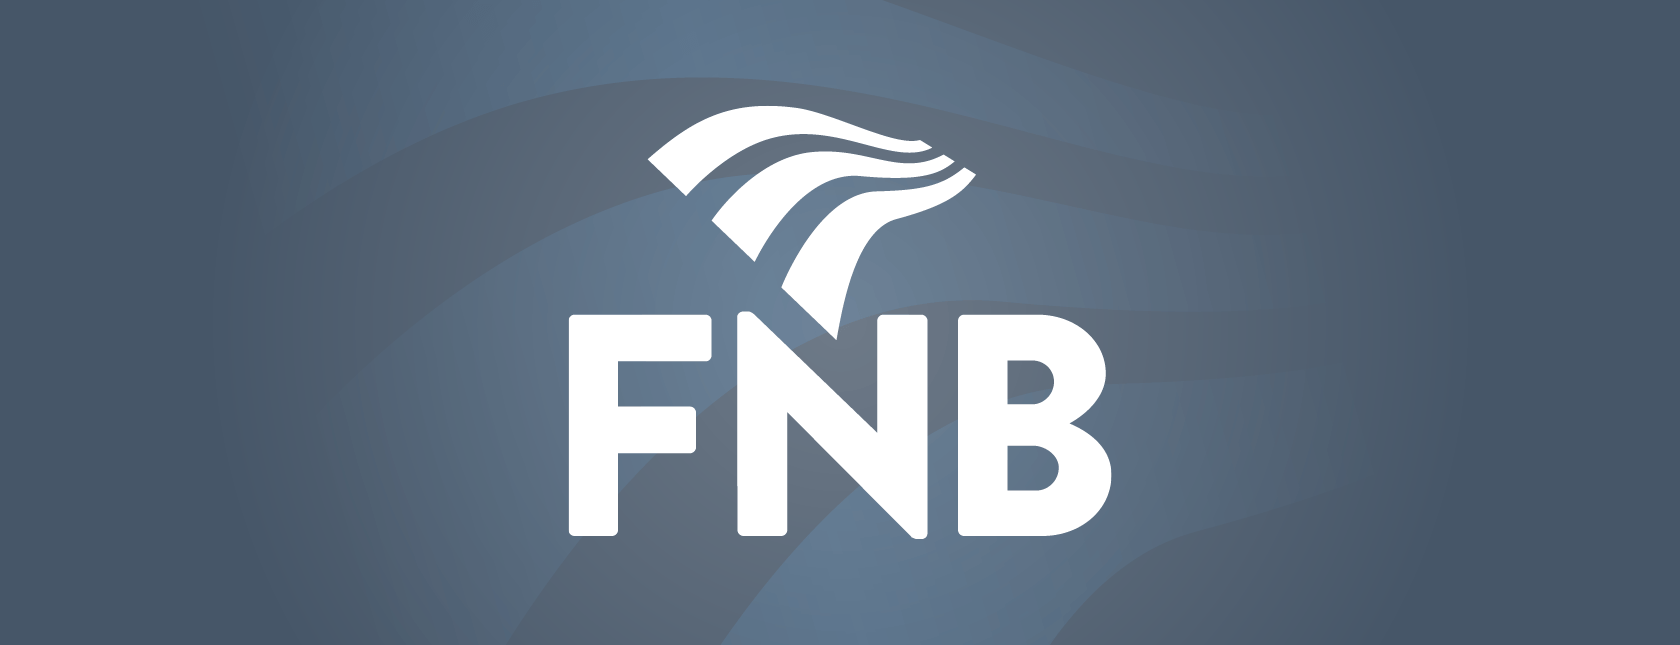 Generic FNB Header Image